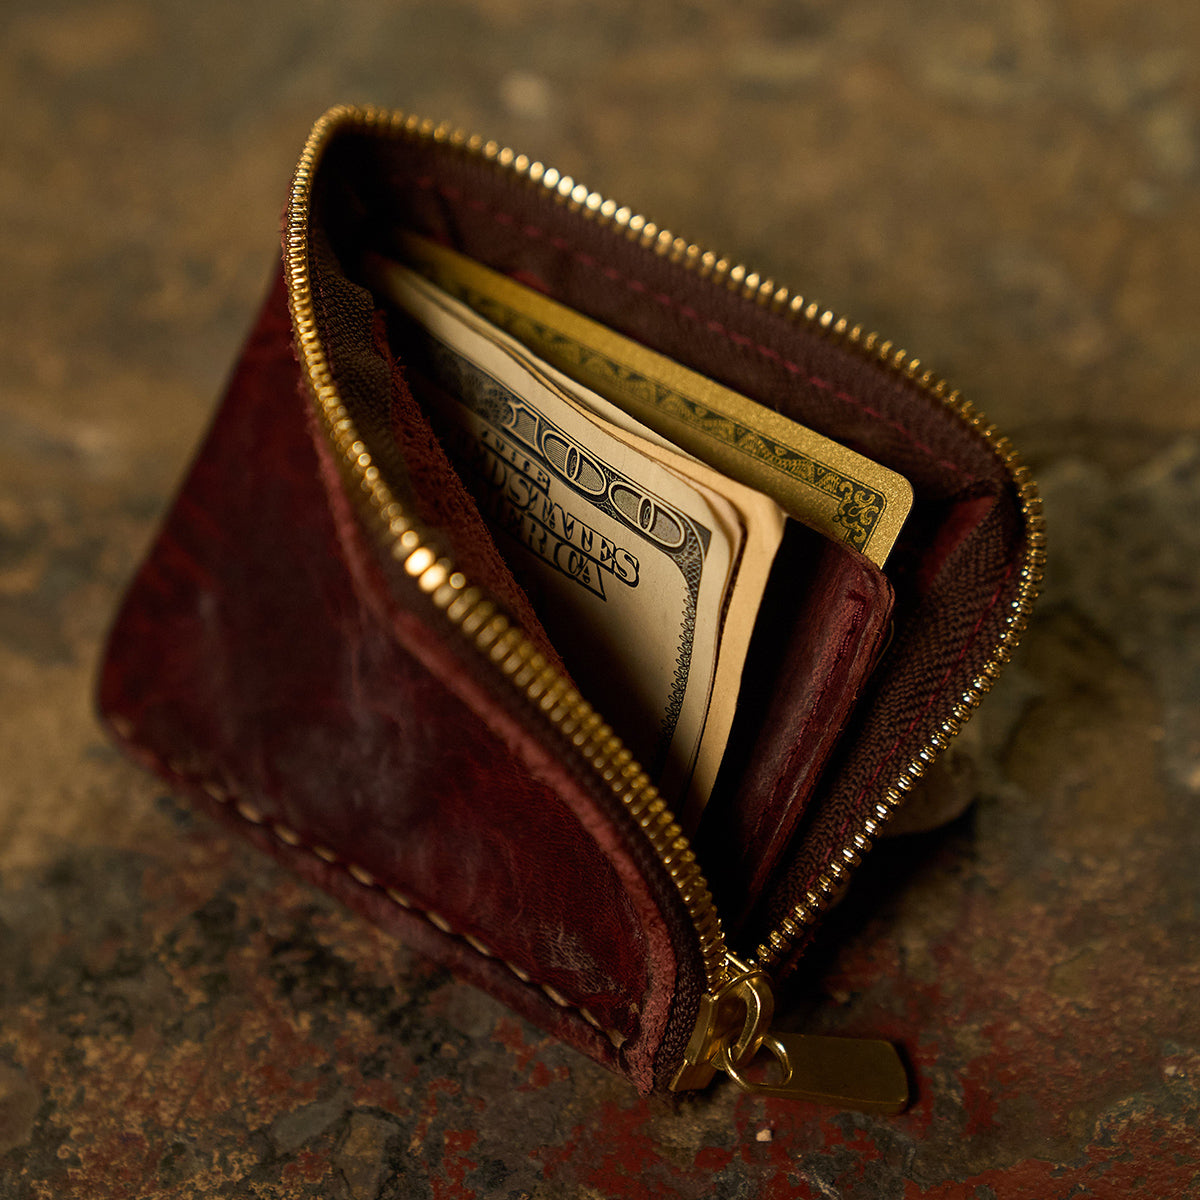 Stone Washed Half-Zip Wallet No.11